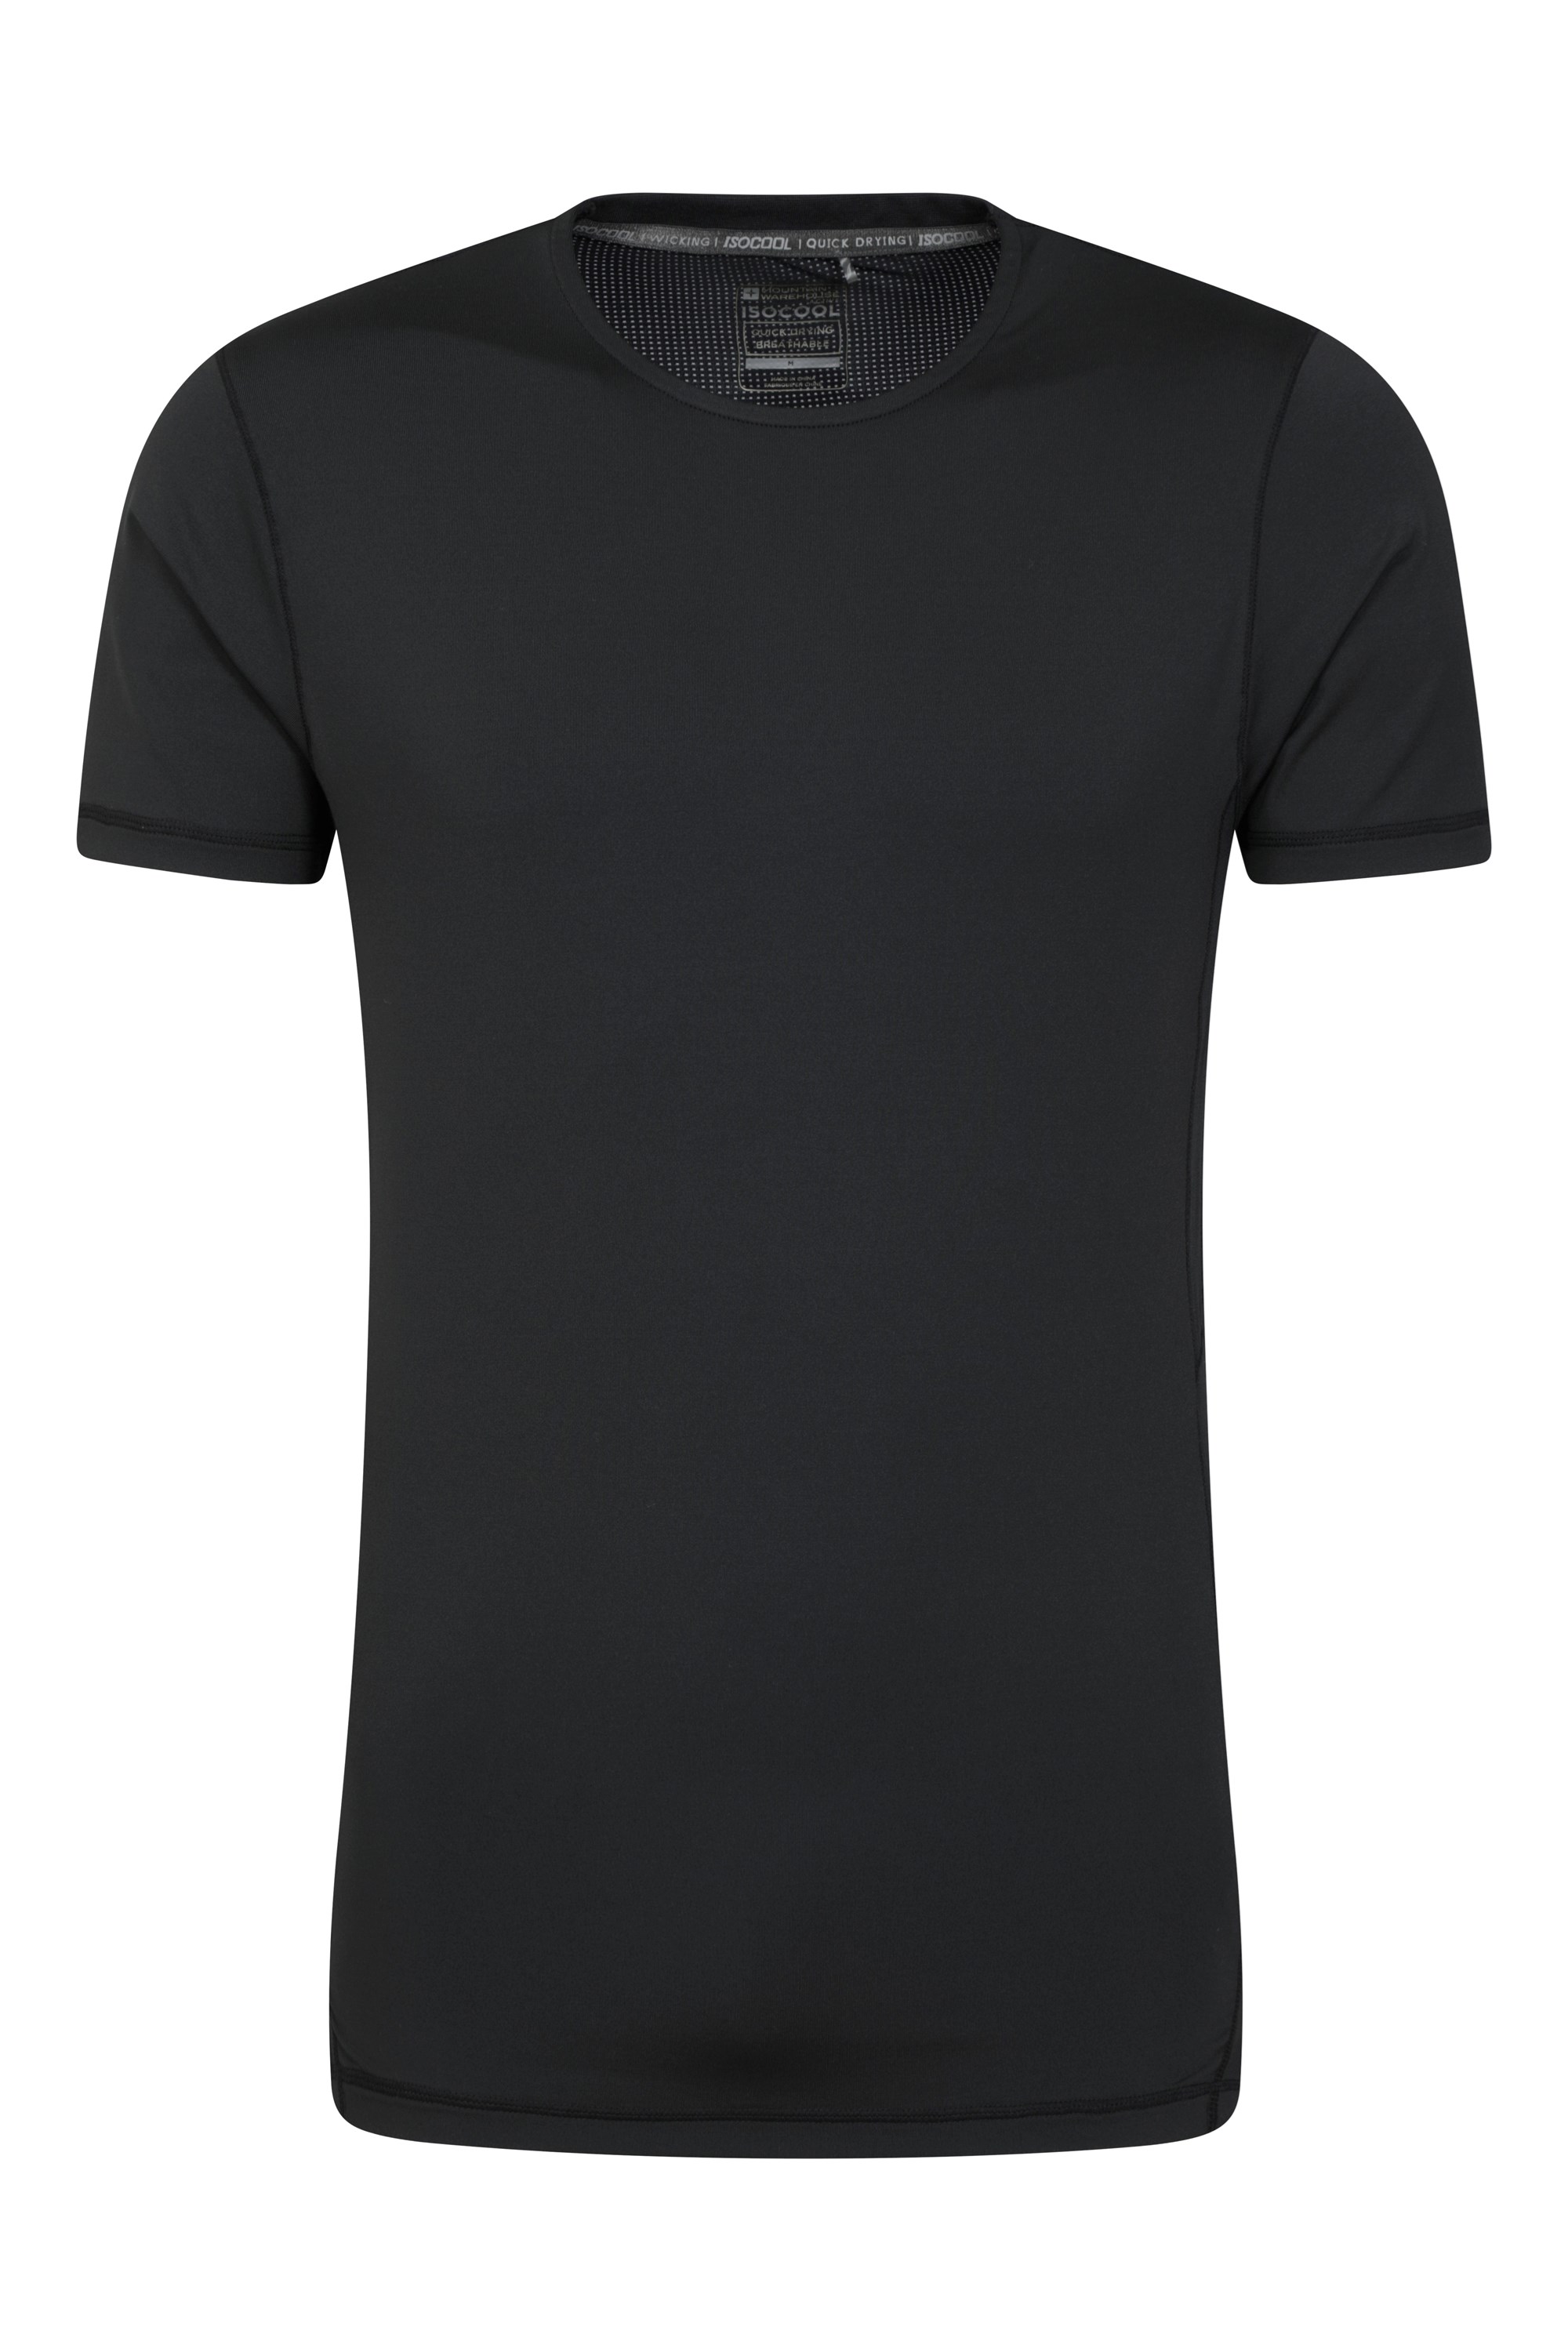 Mantra IsoCool Mens T-Shirt | Mountain Warehouse US